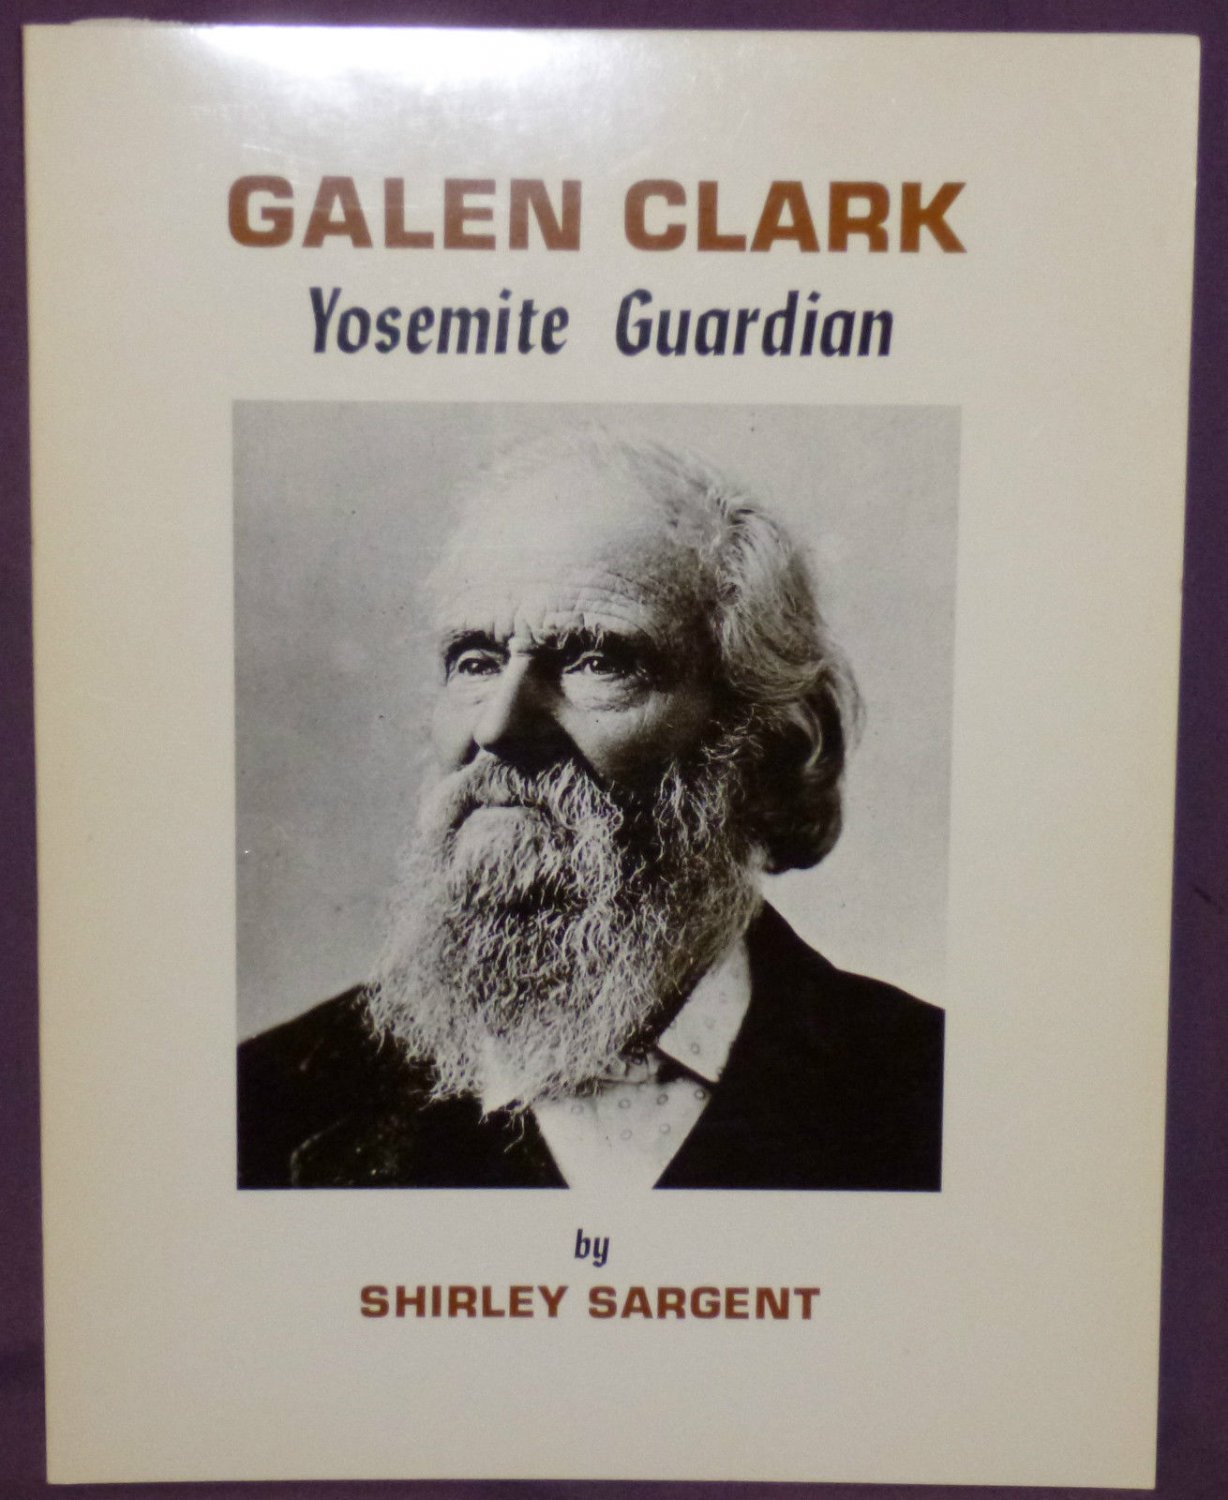 GALEN CLARK: YOSEMITE GUARDIAN book paperback Shirley Sargent 1981 illustrated